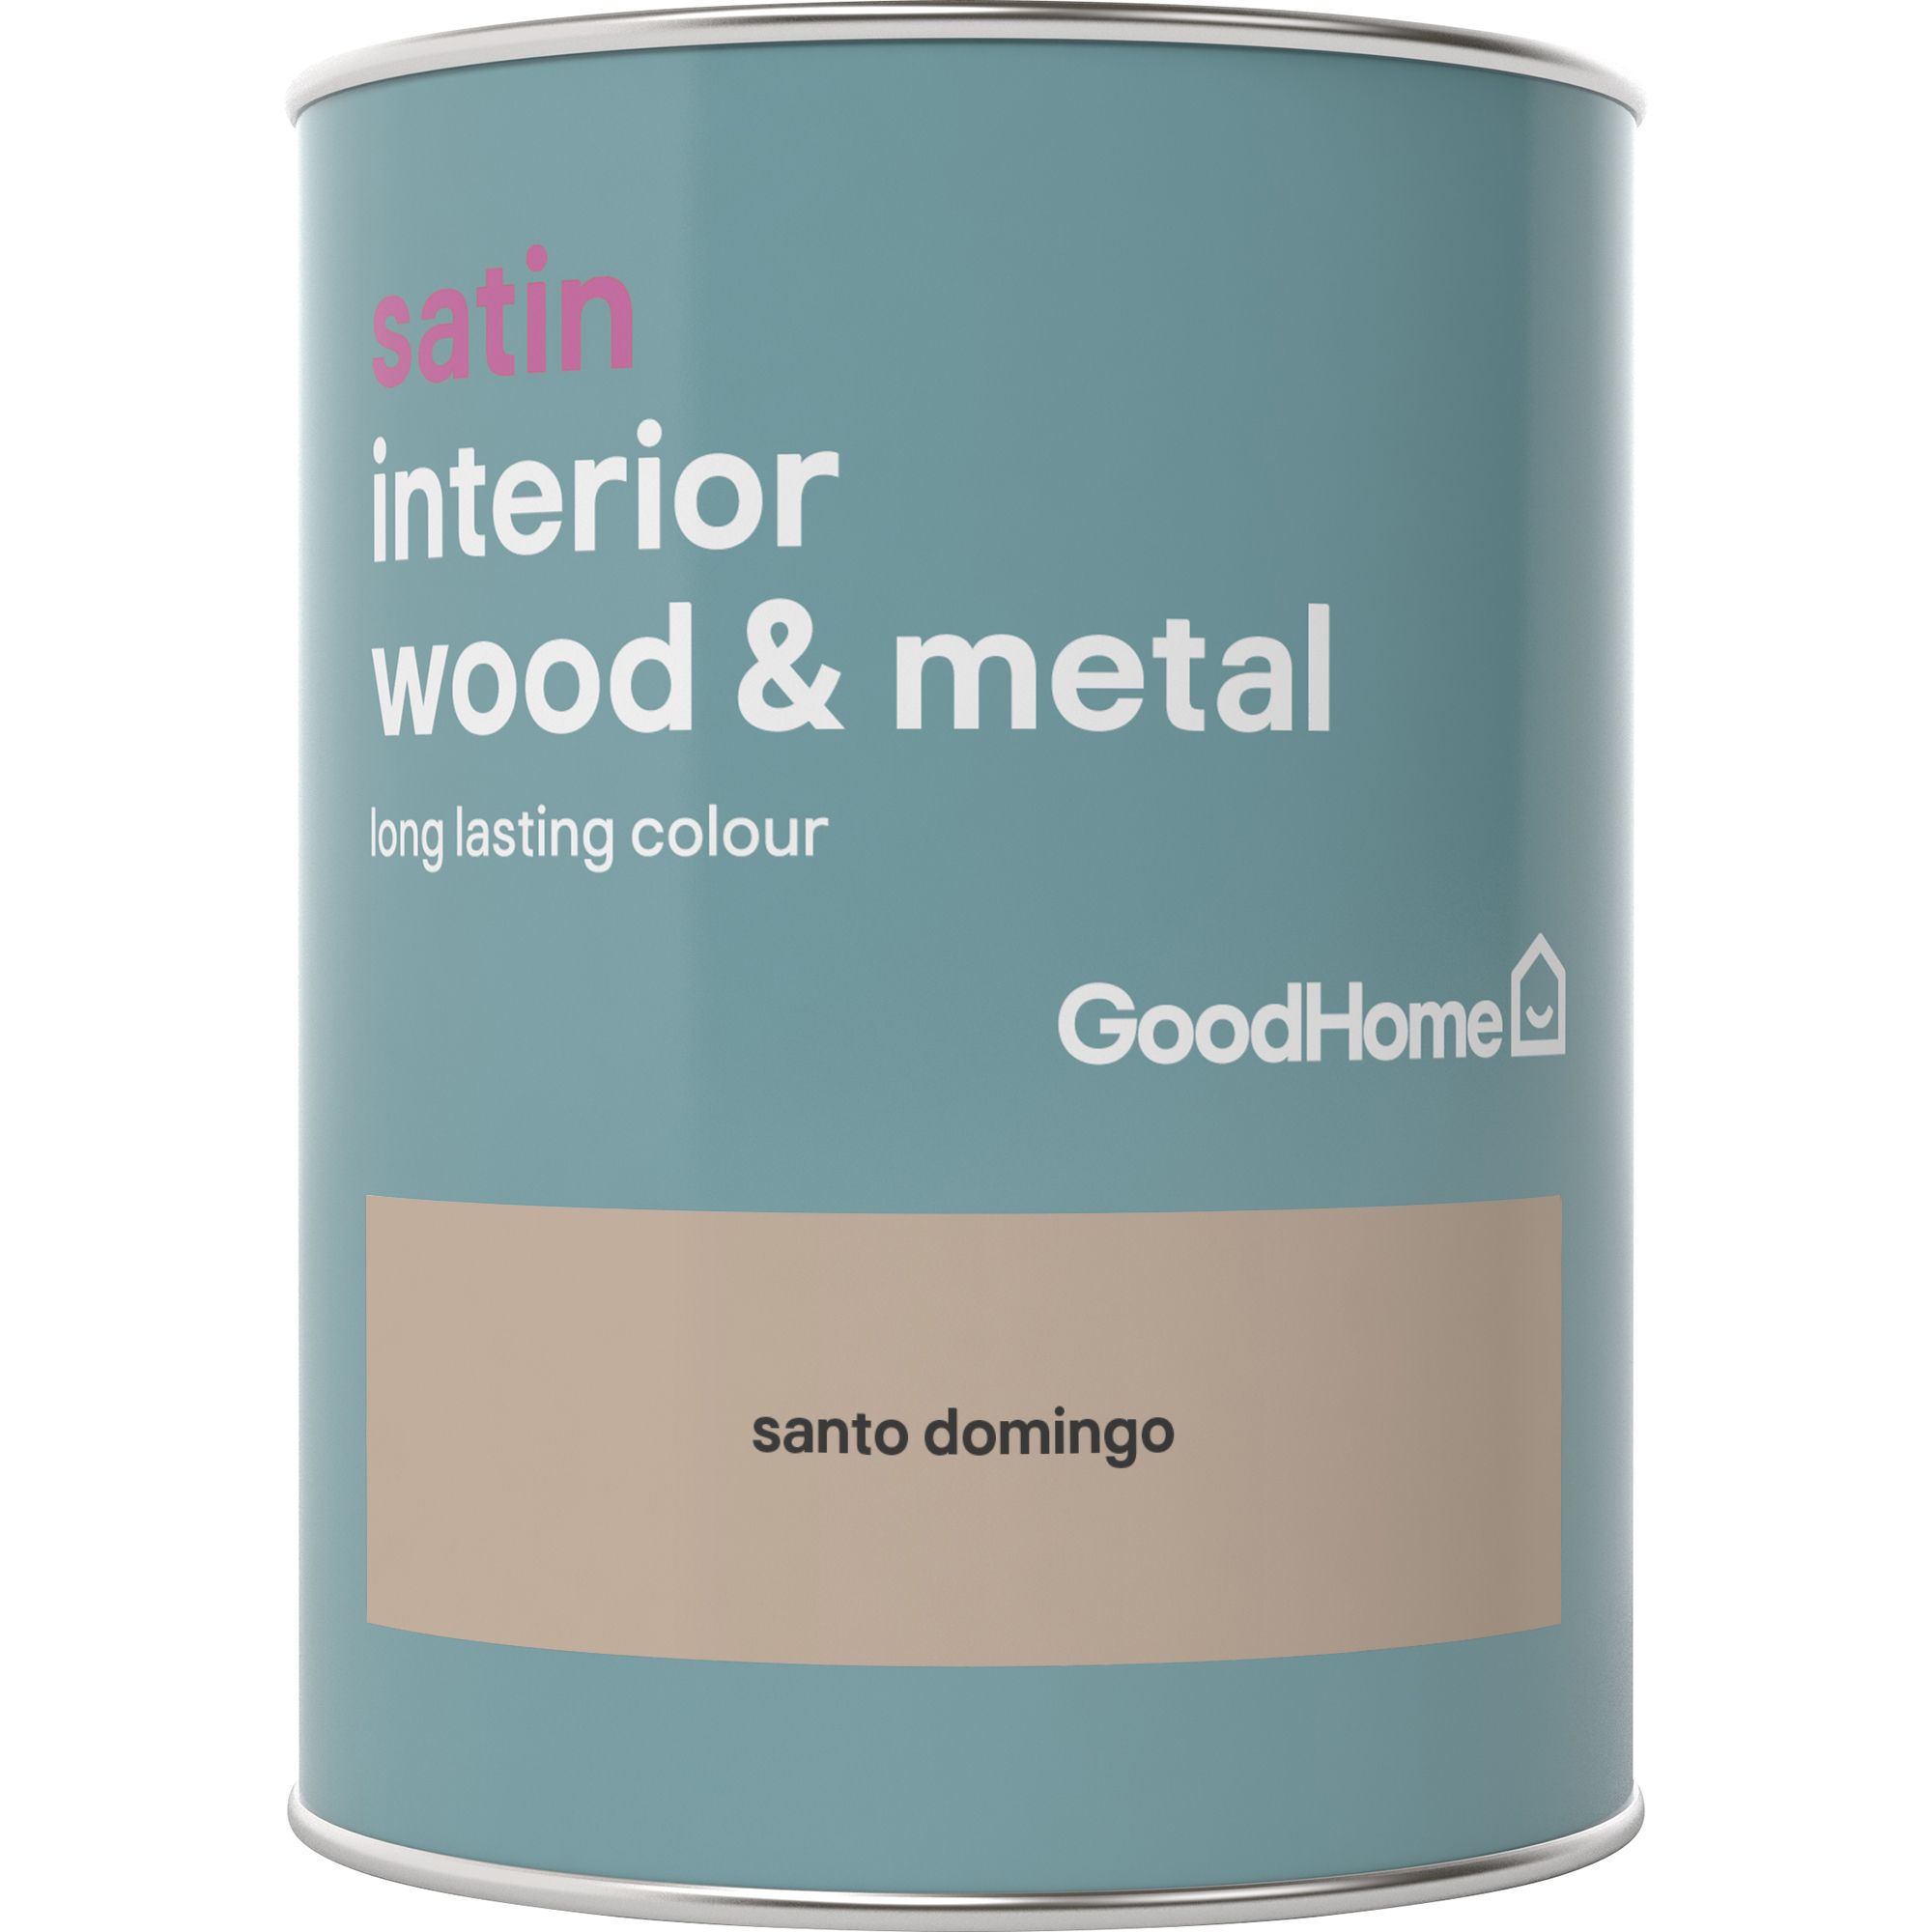 GoodHome Santo domingo Satin Metal & wood paint, 750ml